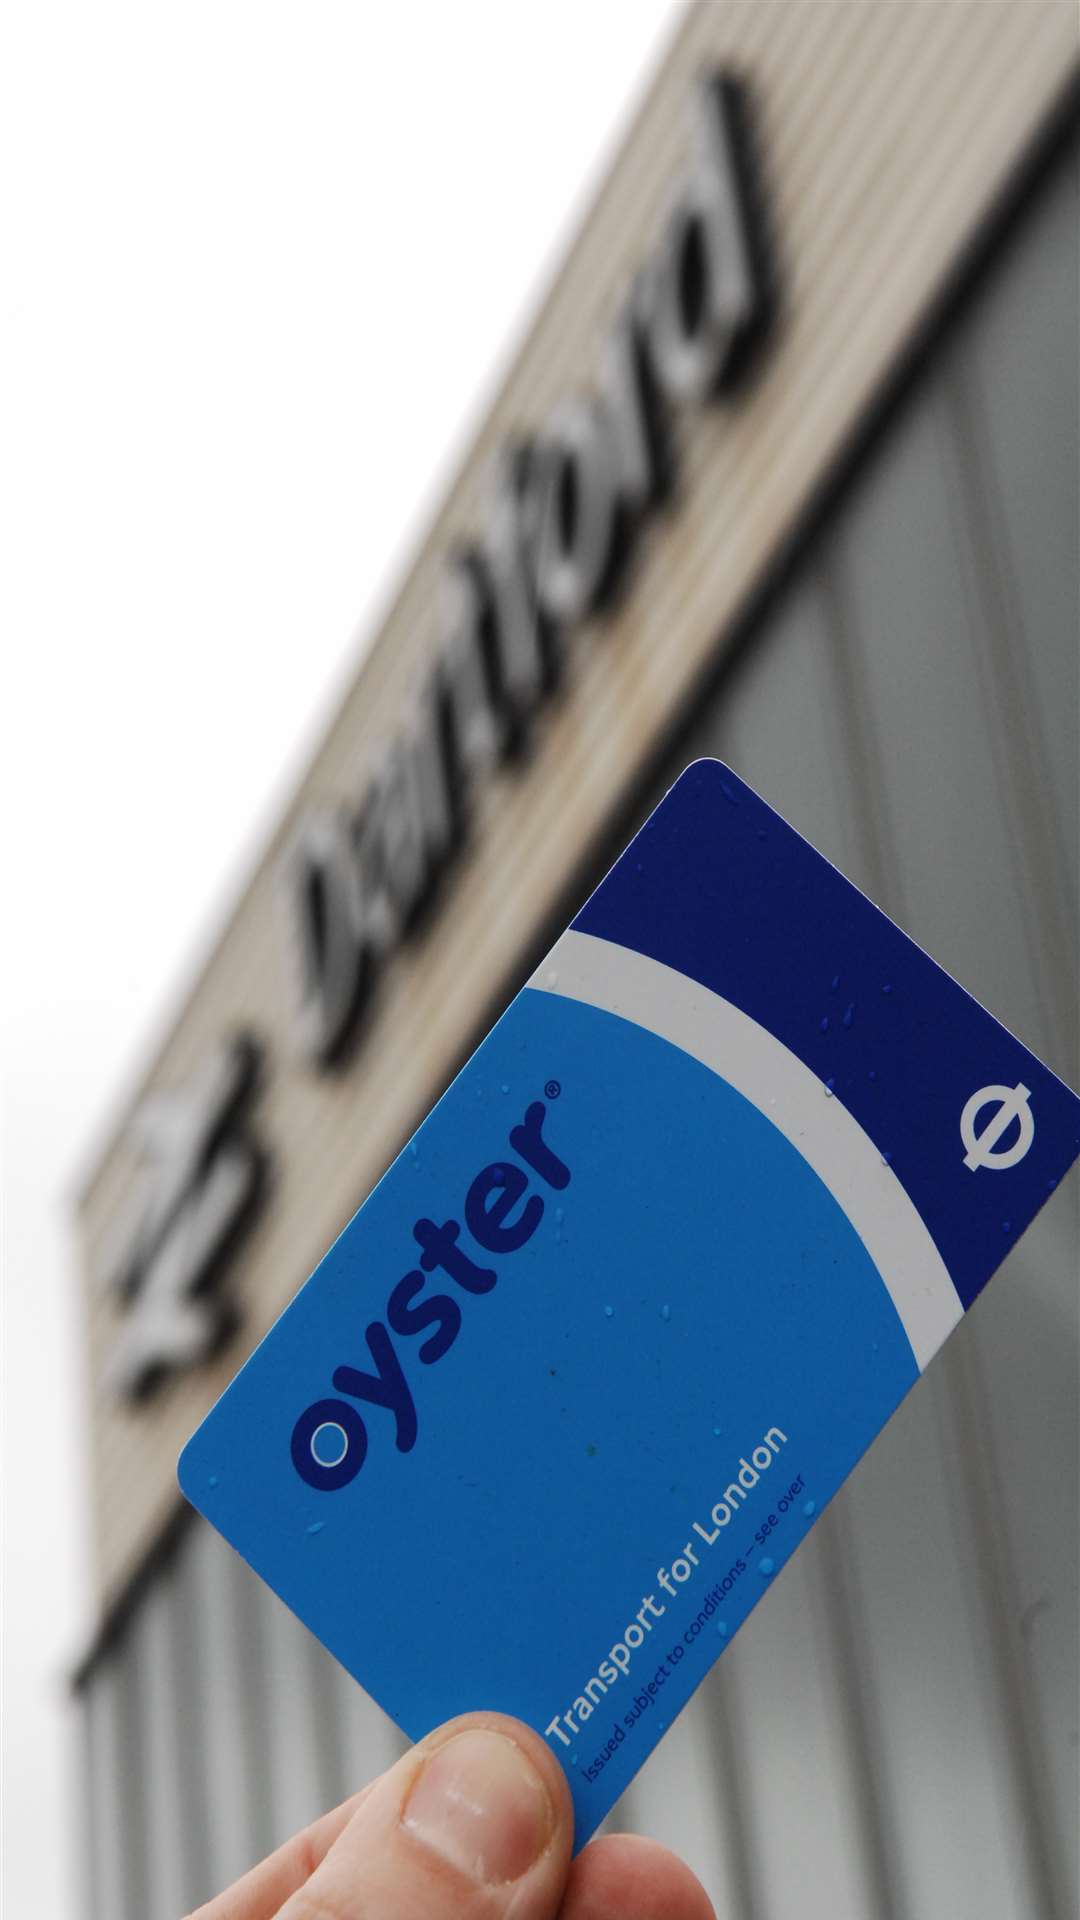 An Oyster card